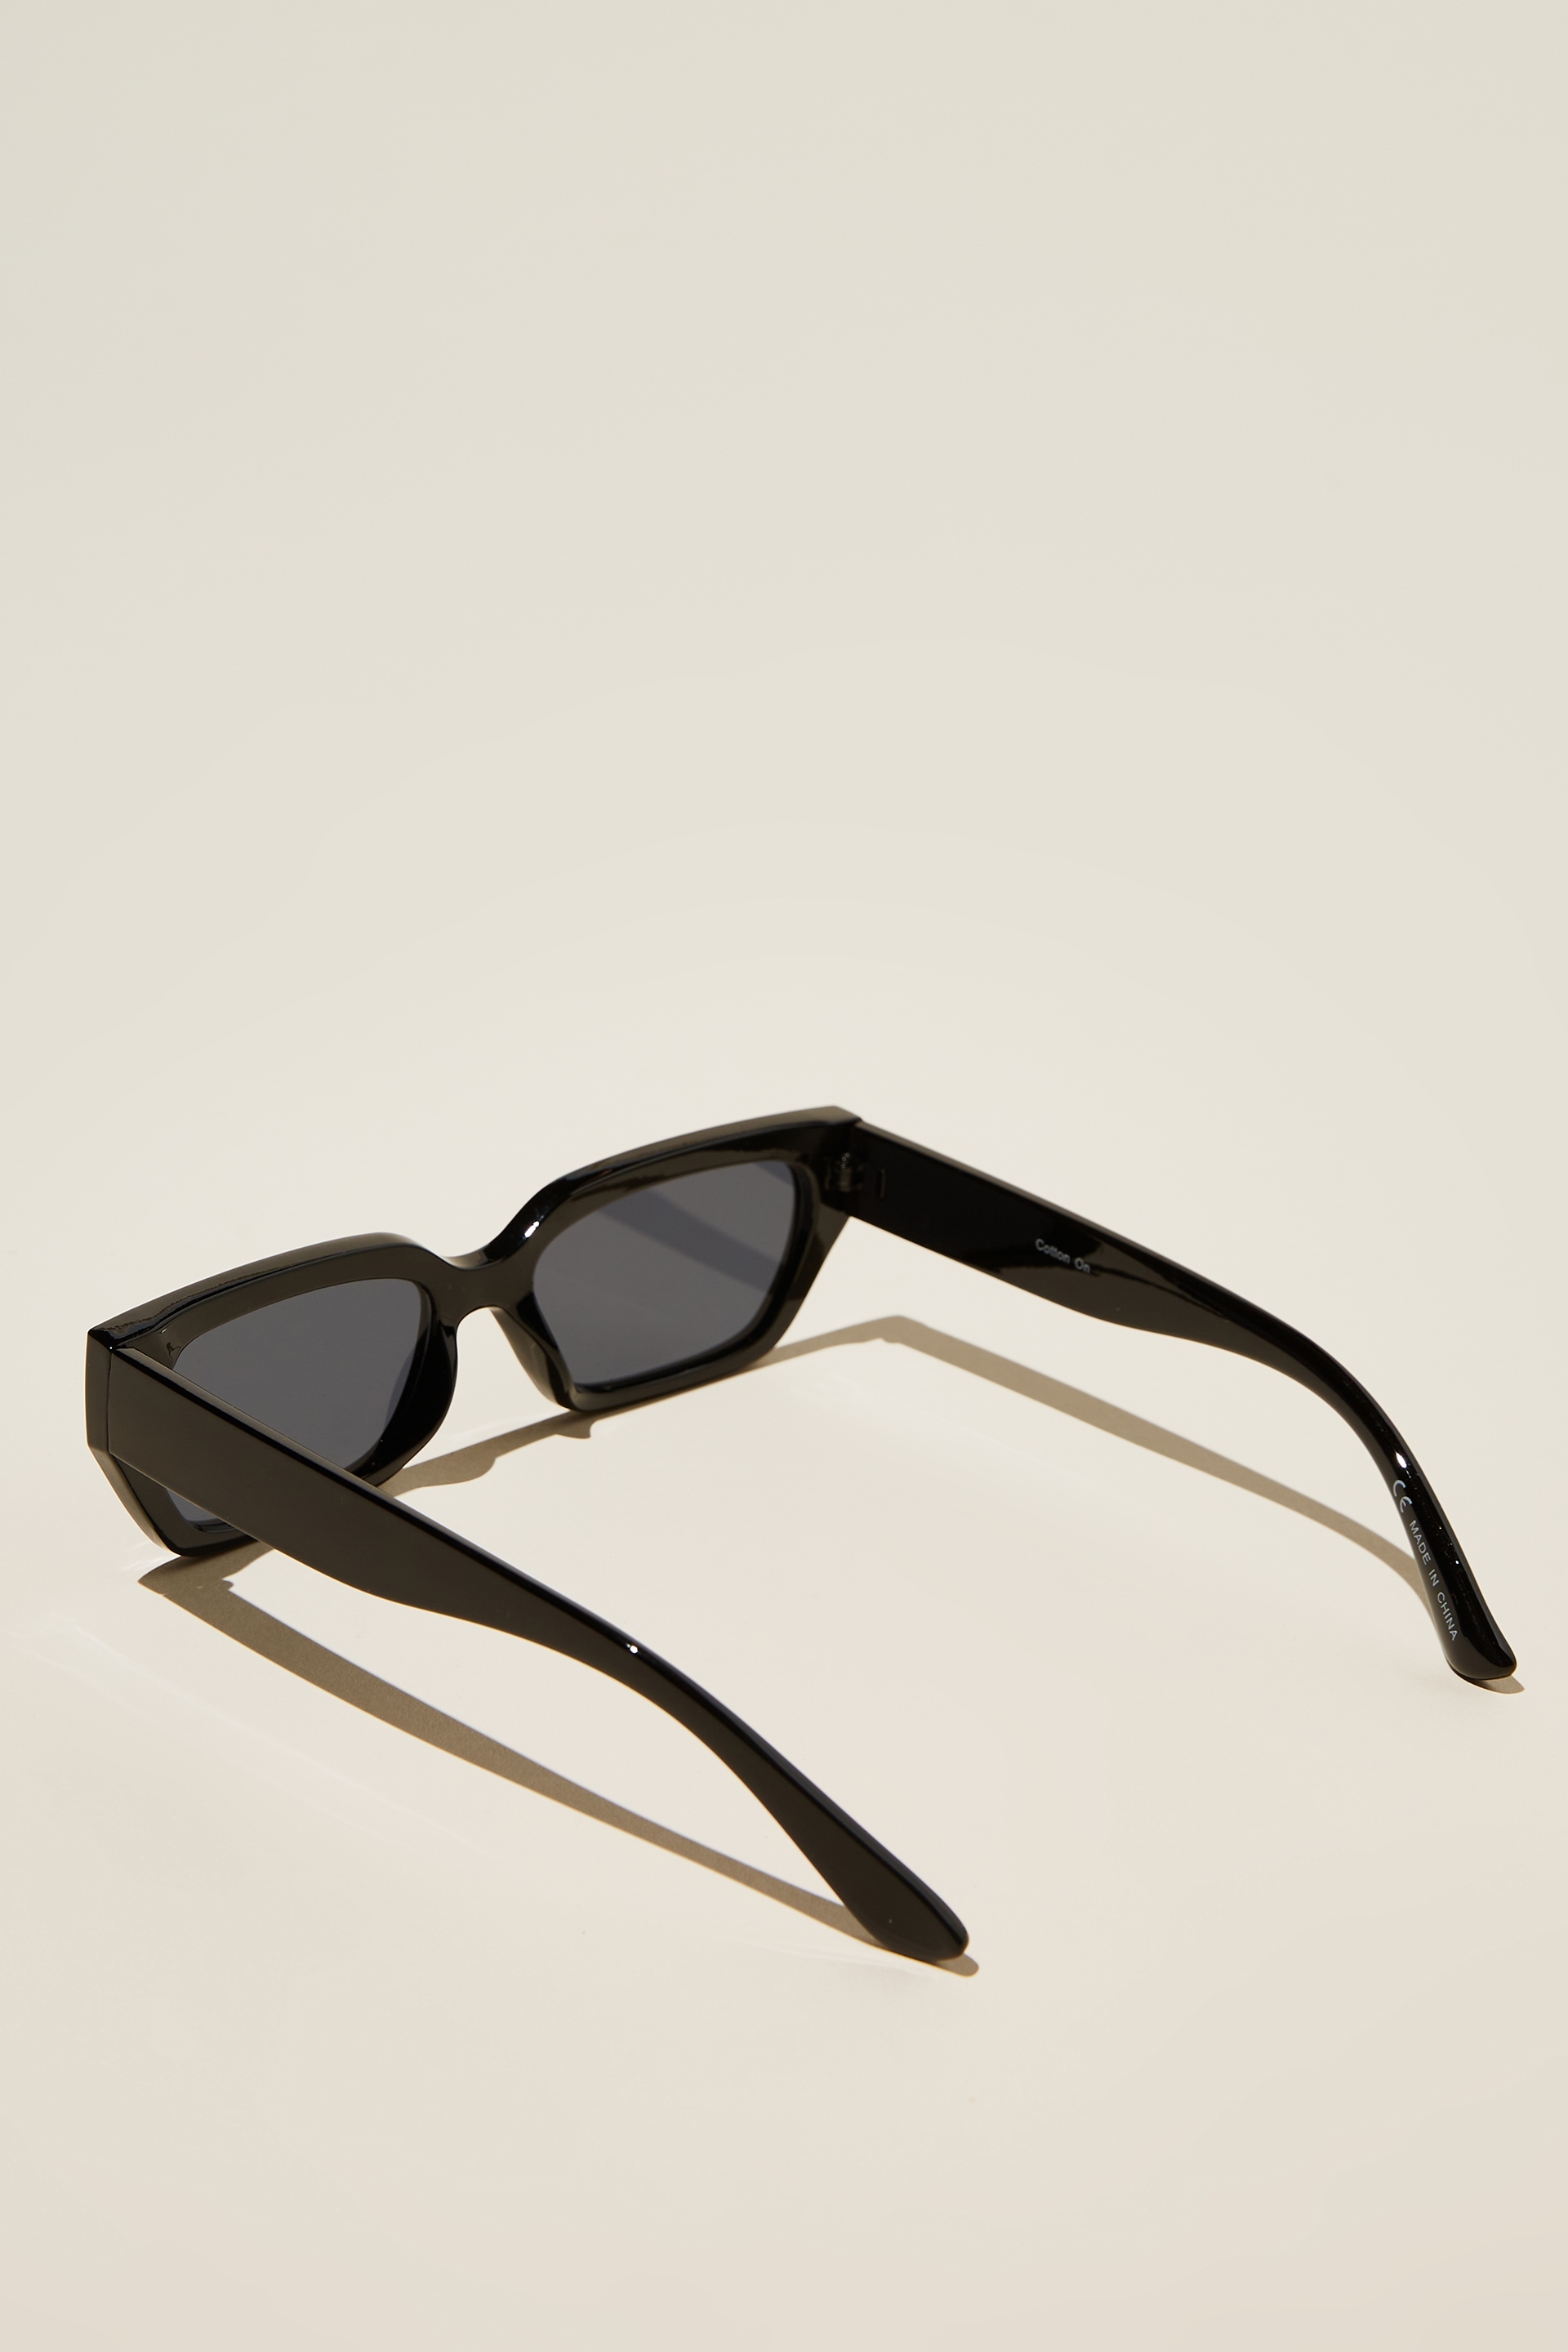 The Razor Sunglasses